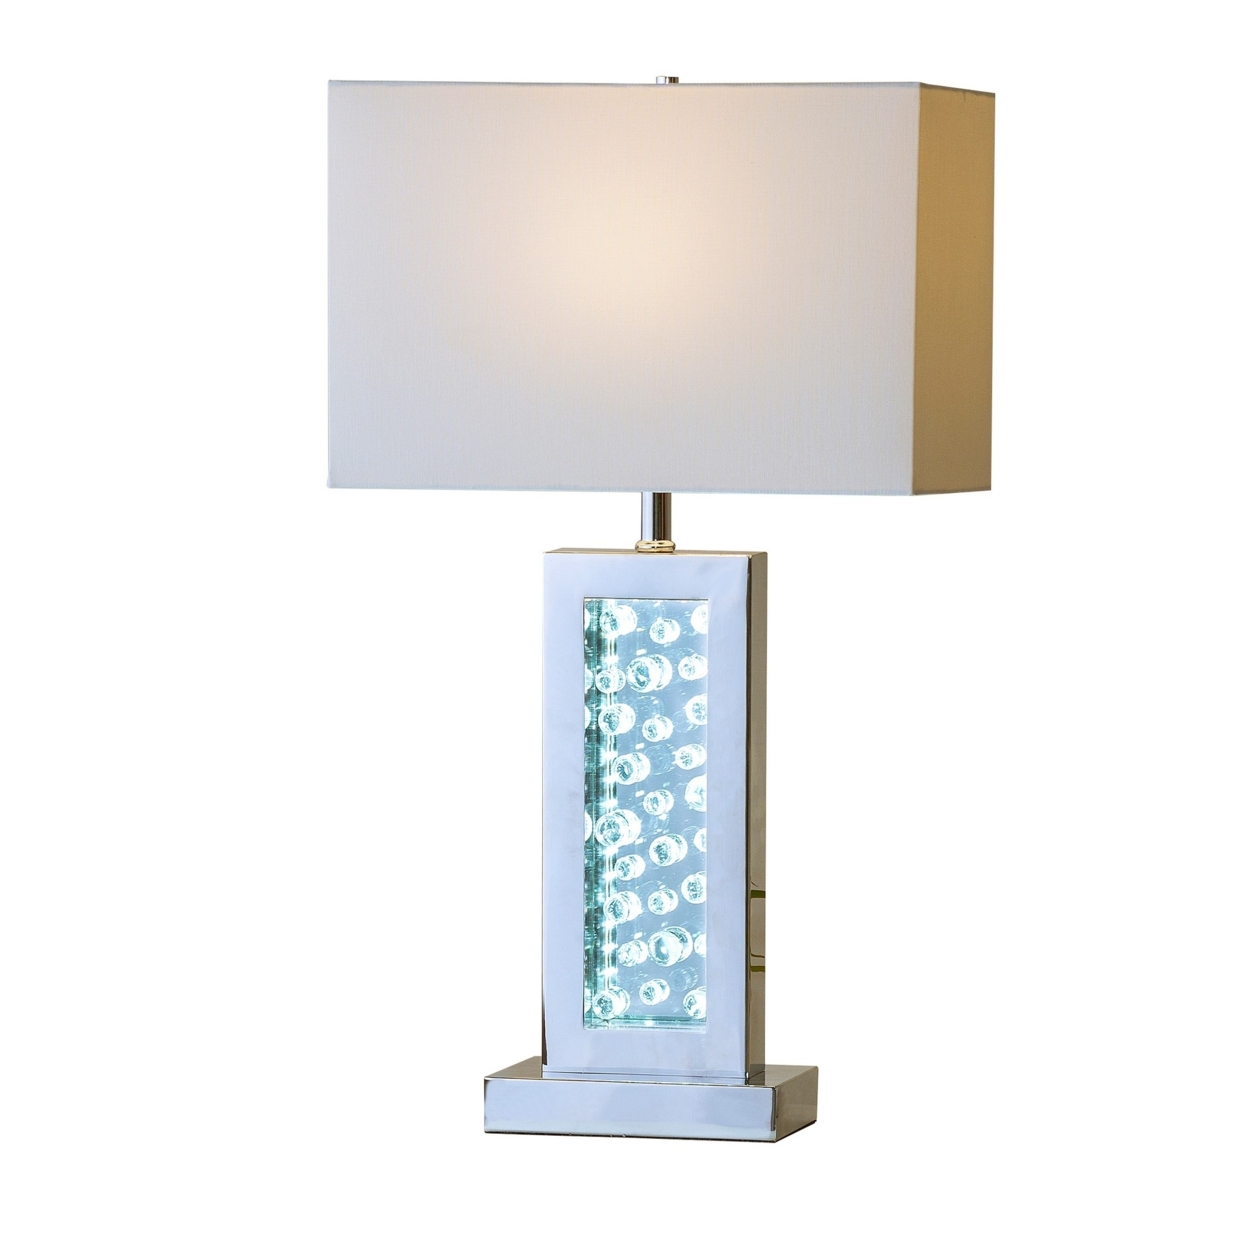 Rectangular Drum Shade Table Lamp With Dual Lighting, White And Chrome- Saltoro Sherpi